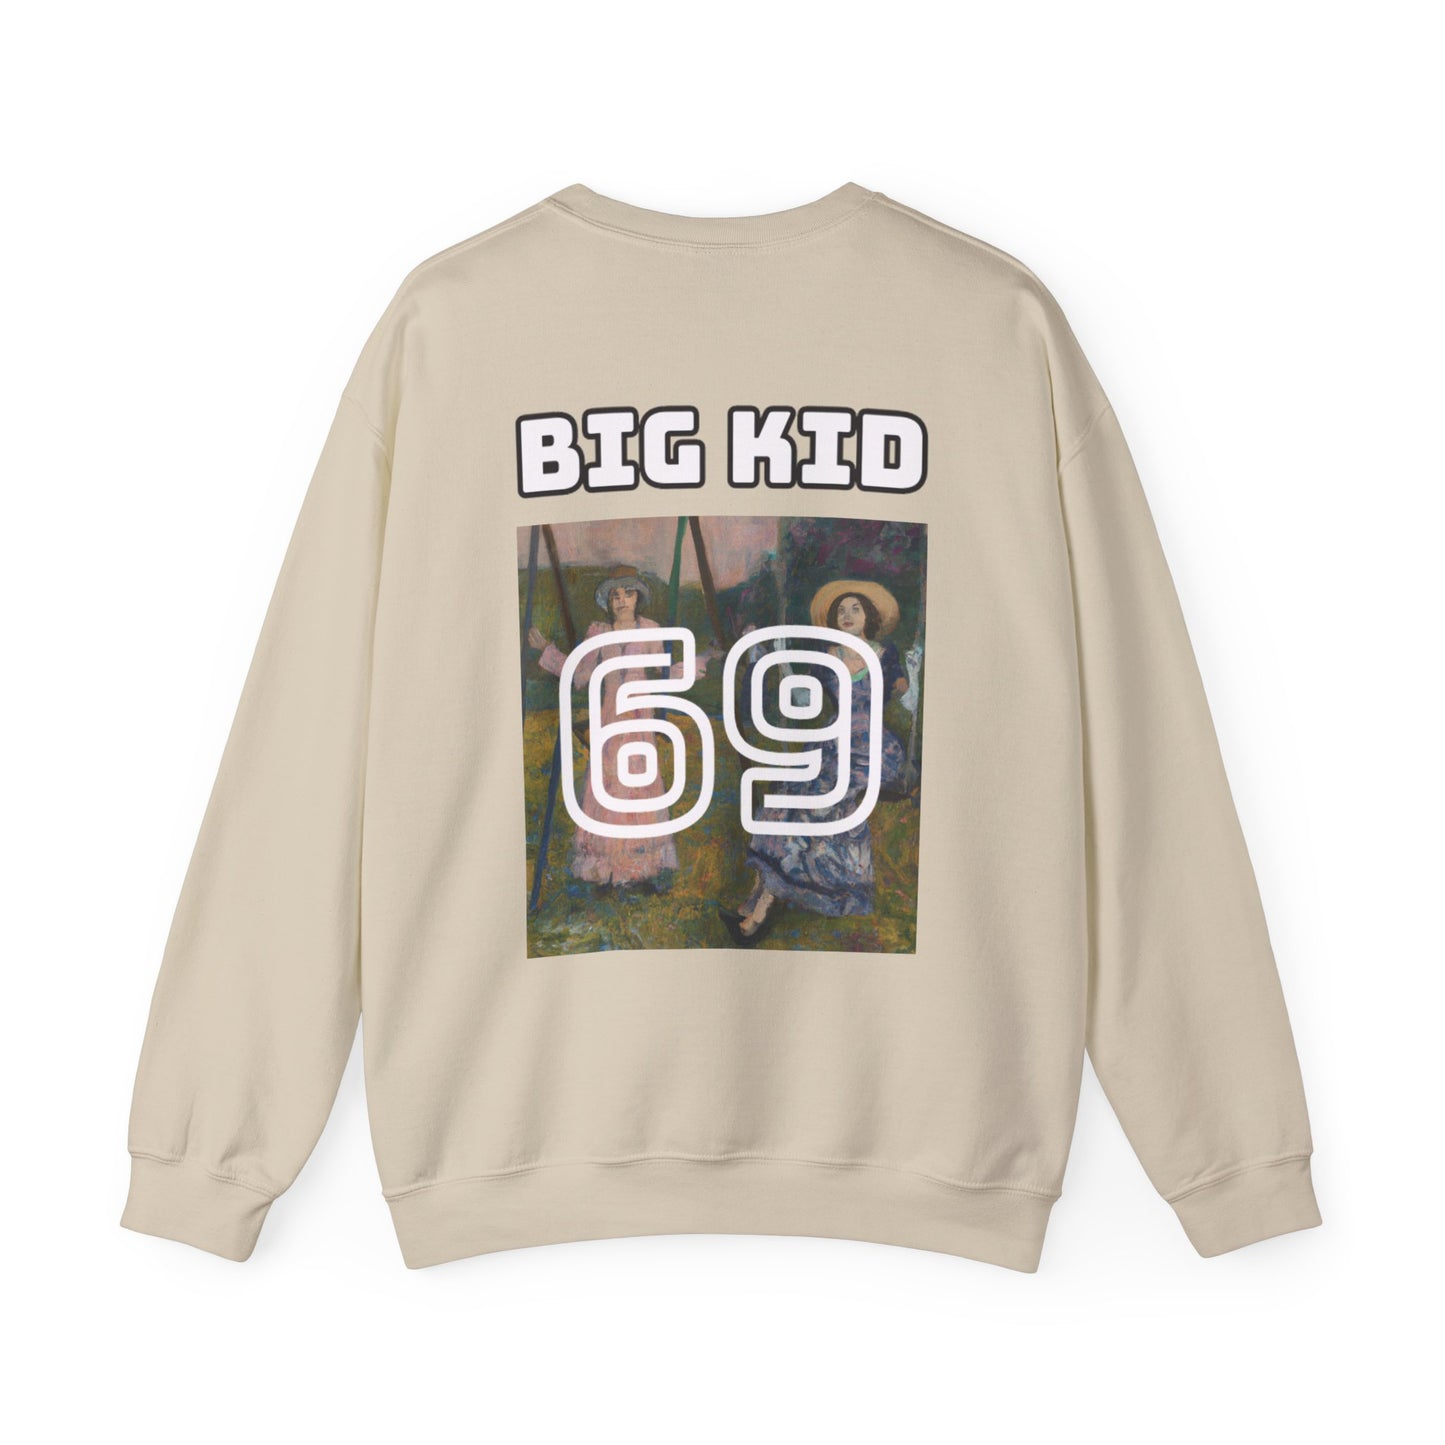 BIG KID '69 - sweatshirt x Sarah Words Collection